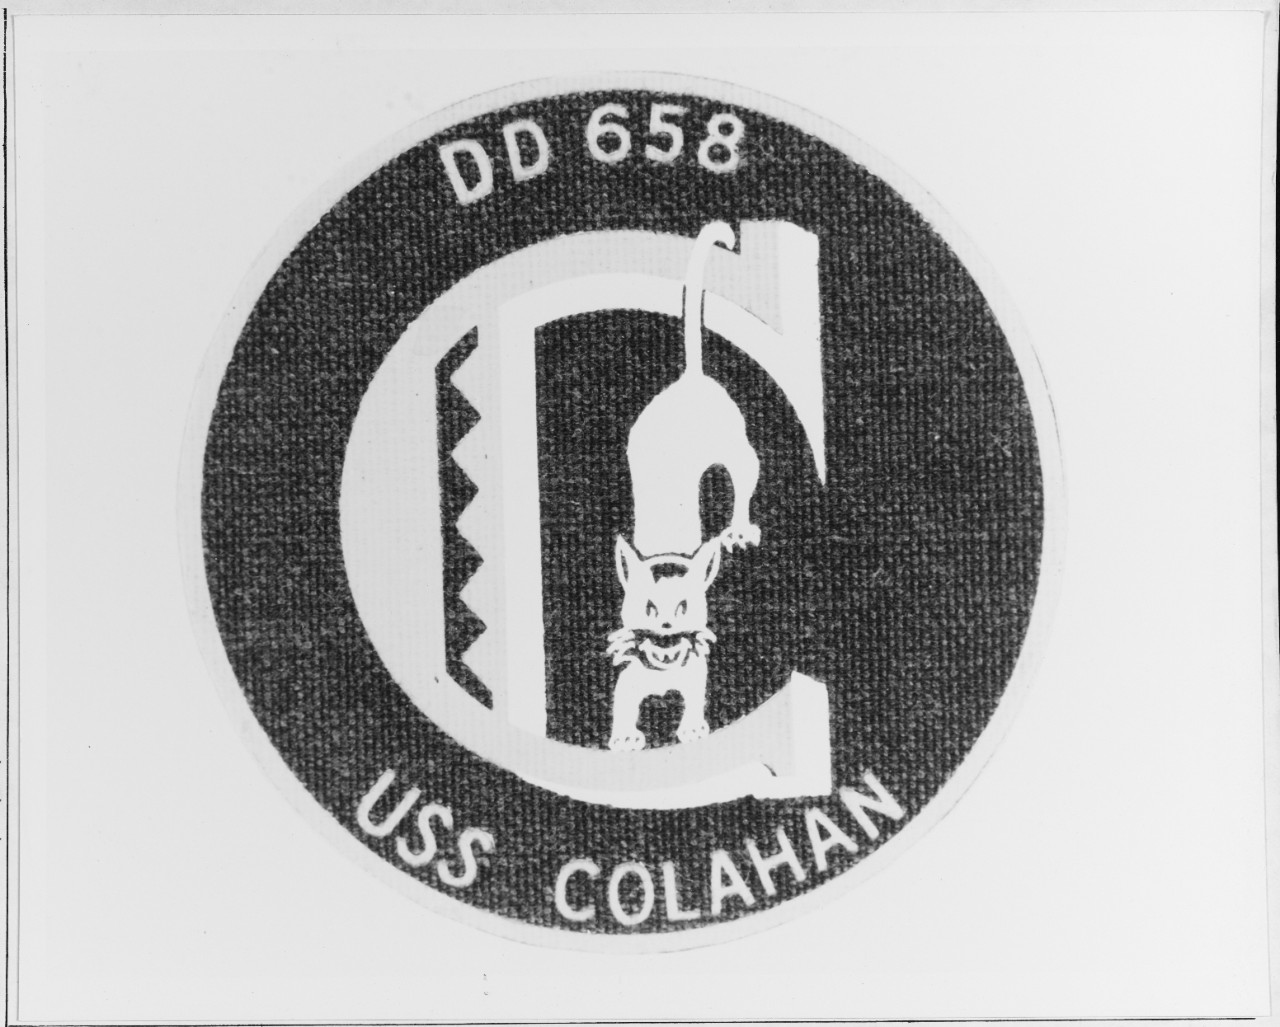 Insignia: USS COLAHAN (DD-658)